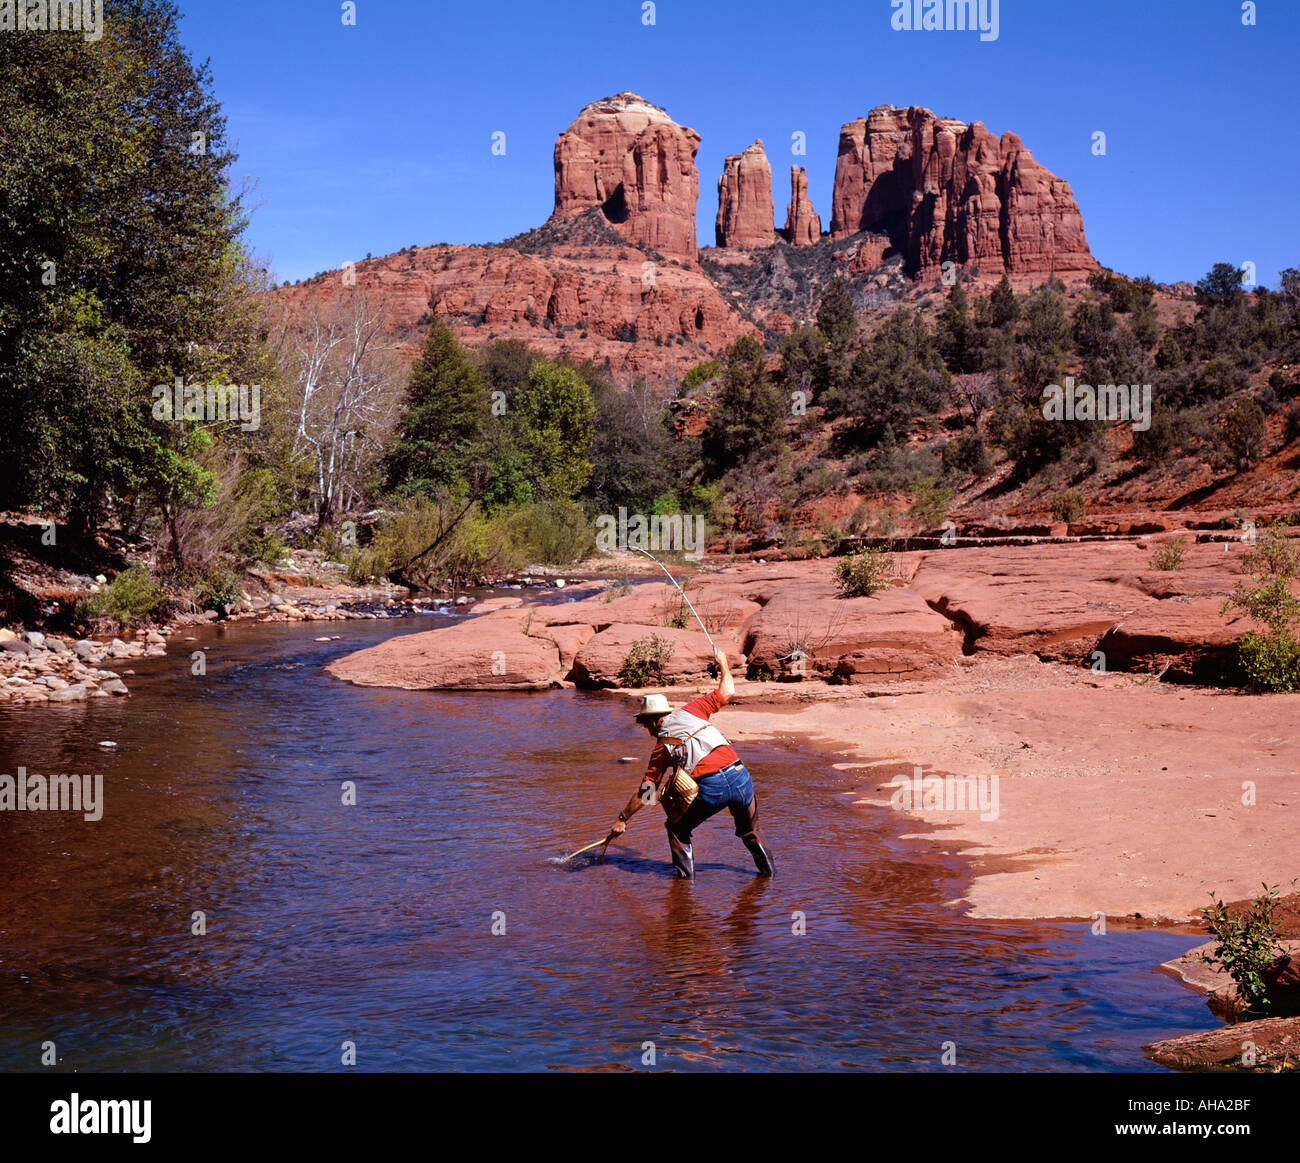 man fishing in stream at Red Rock Crossing Sedona Arizona USA Stock Photo -  Alamy